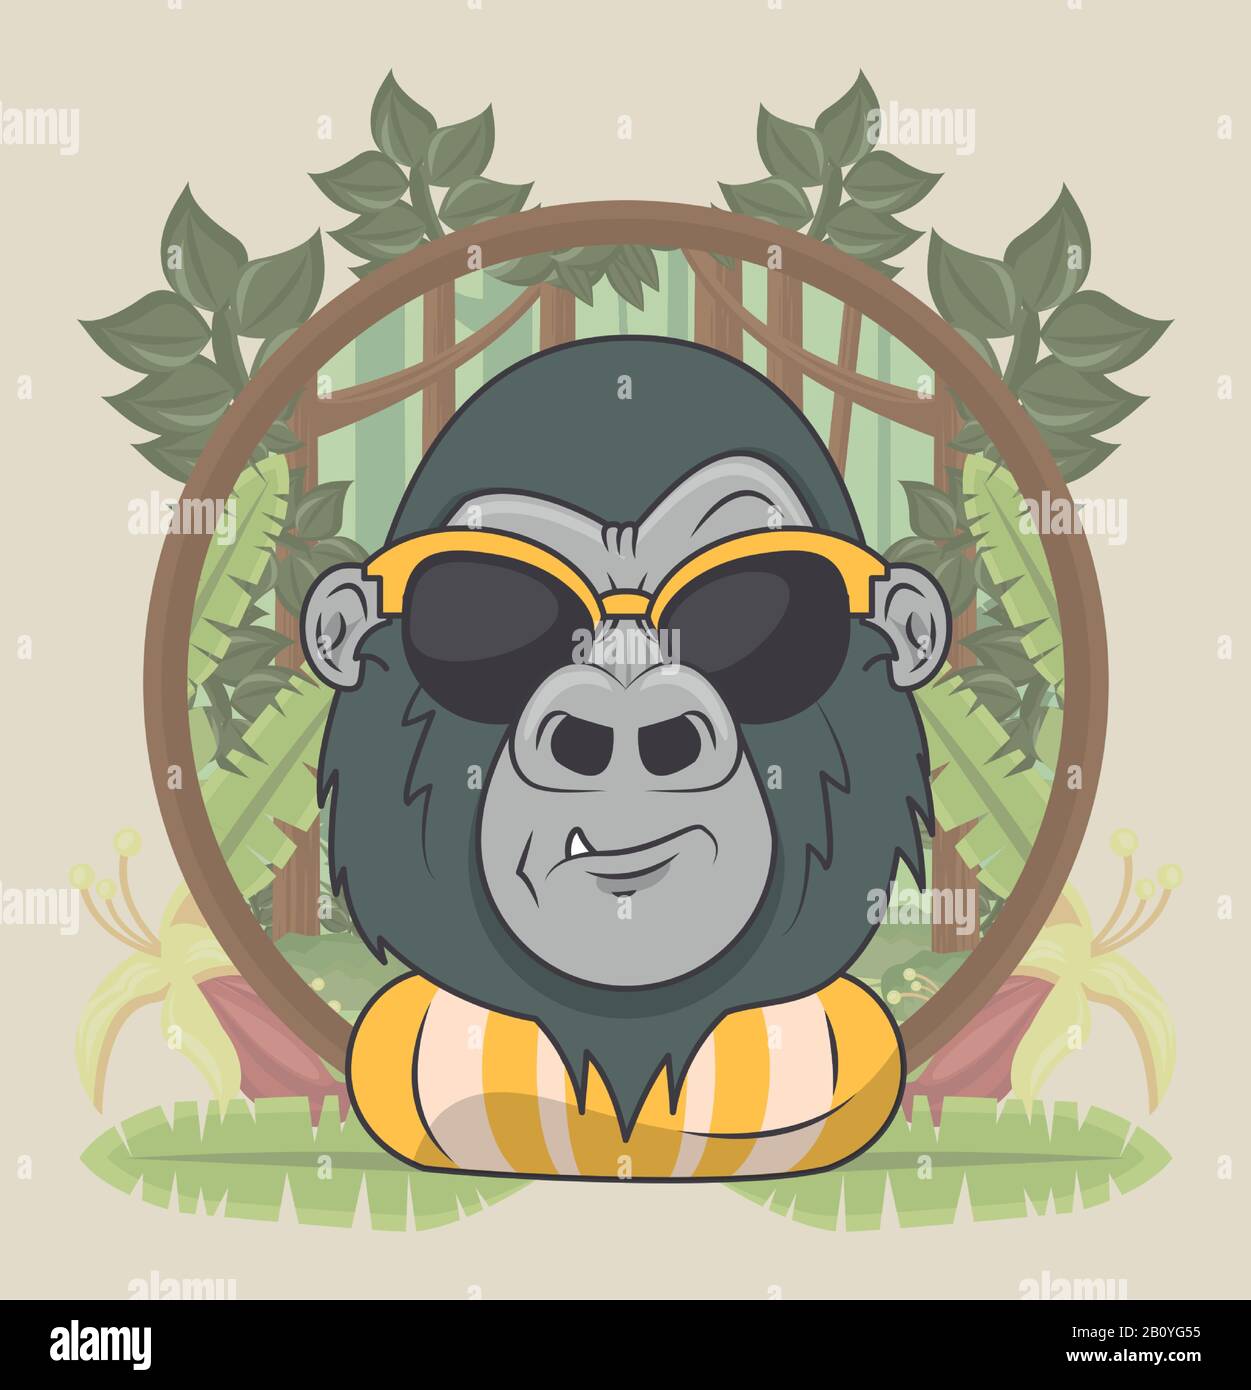 https://c8.alamy.com/comp/2B0YG55/funny-gorilla-with-sunglasses-cool-style-2B0YG55.jpg